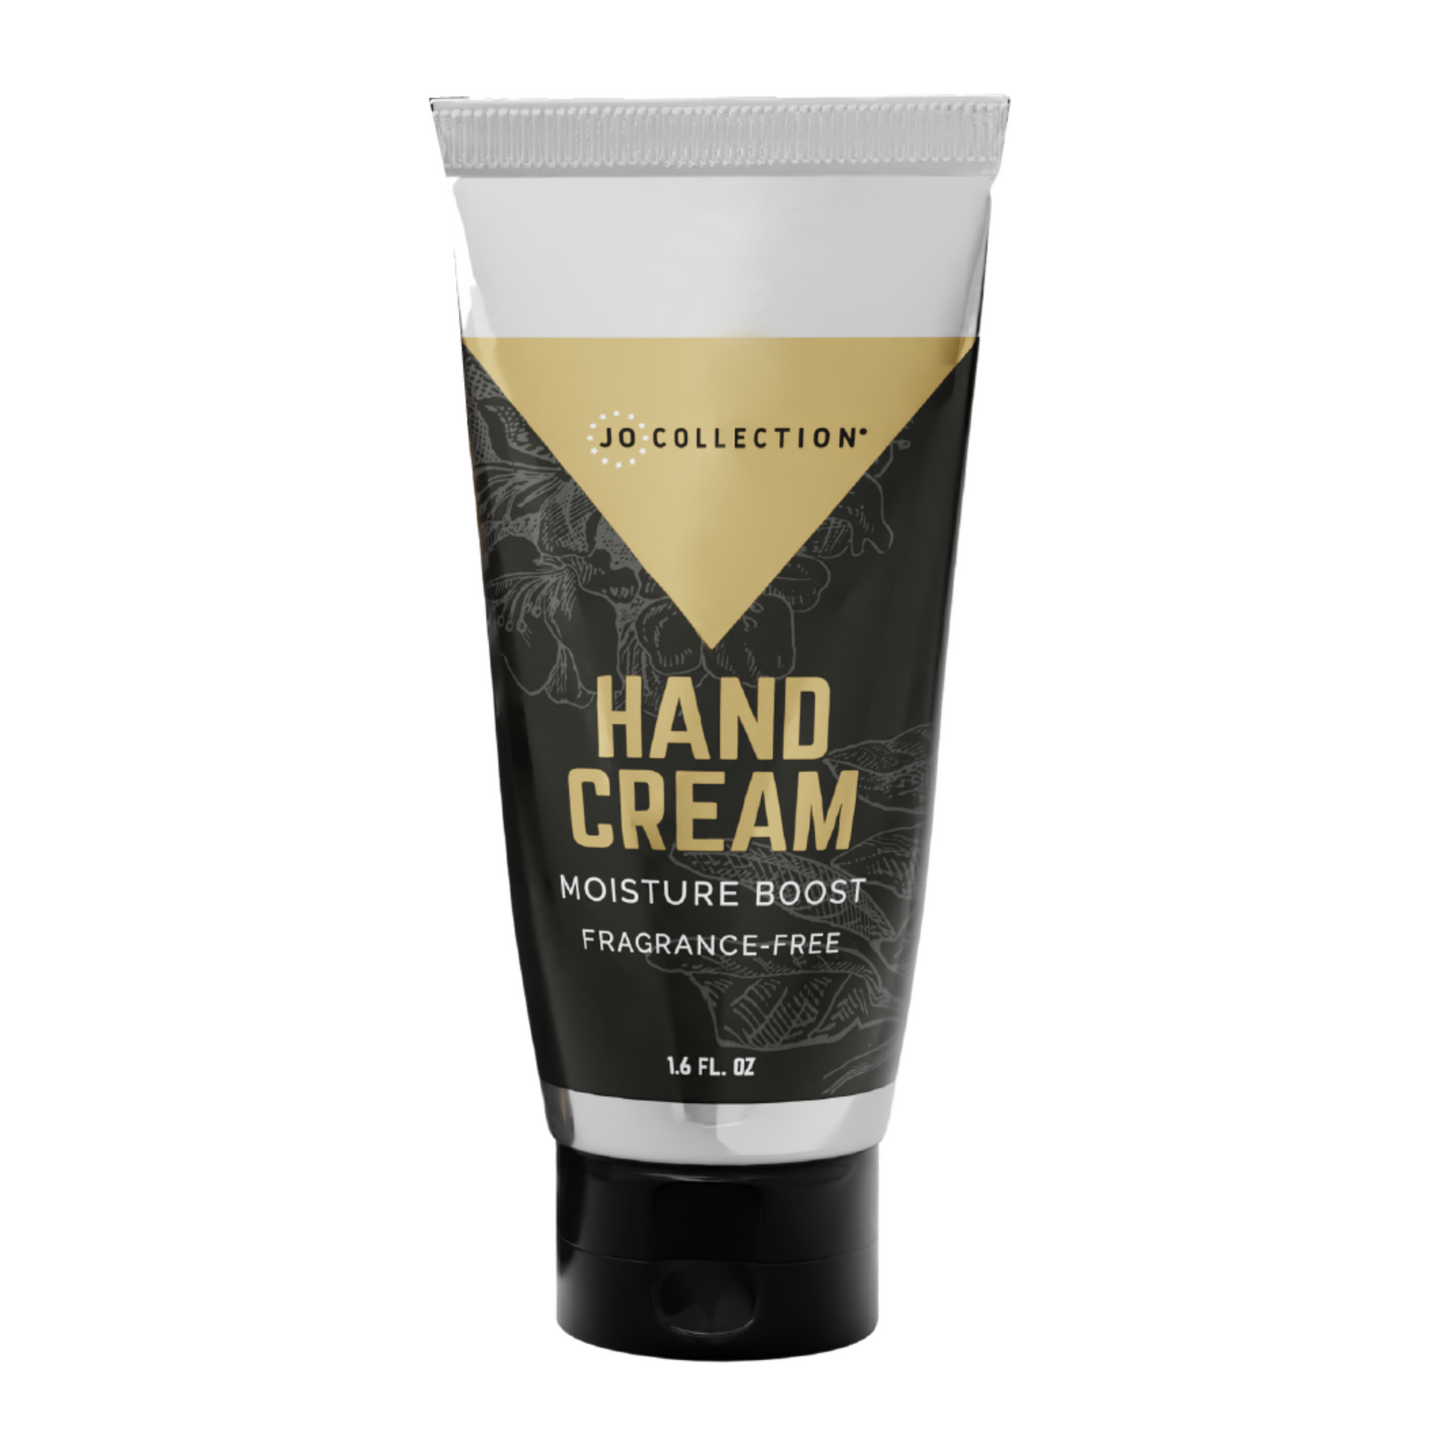 Unscented Hand Cream | Moisture Boost | Fragrance-Free | 1.6 Fl. oz